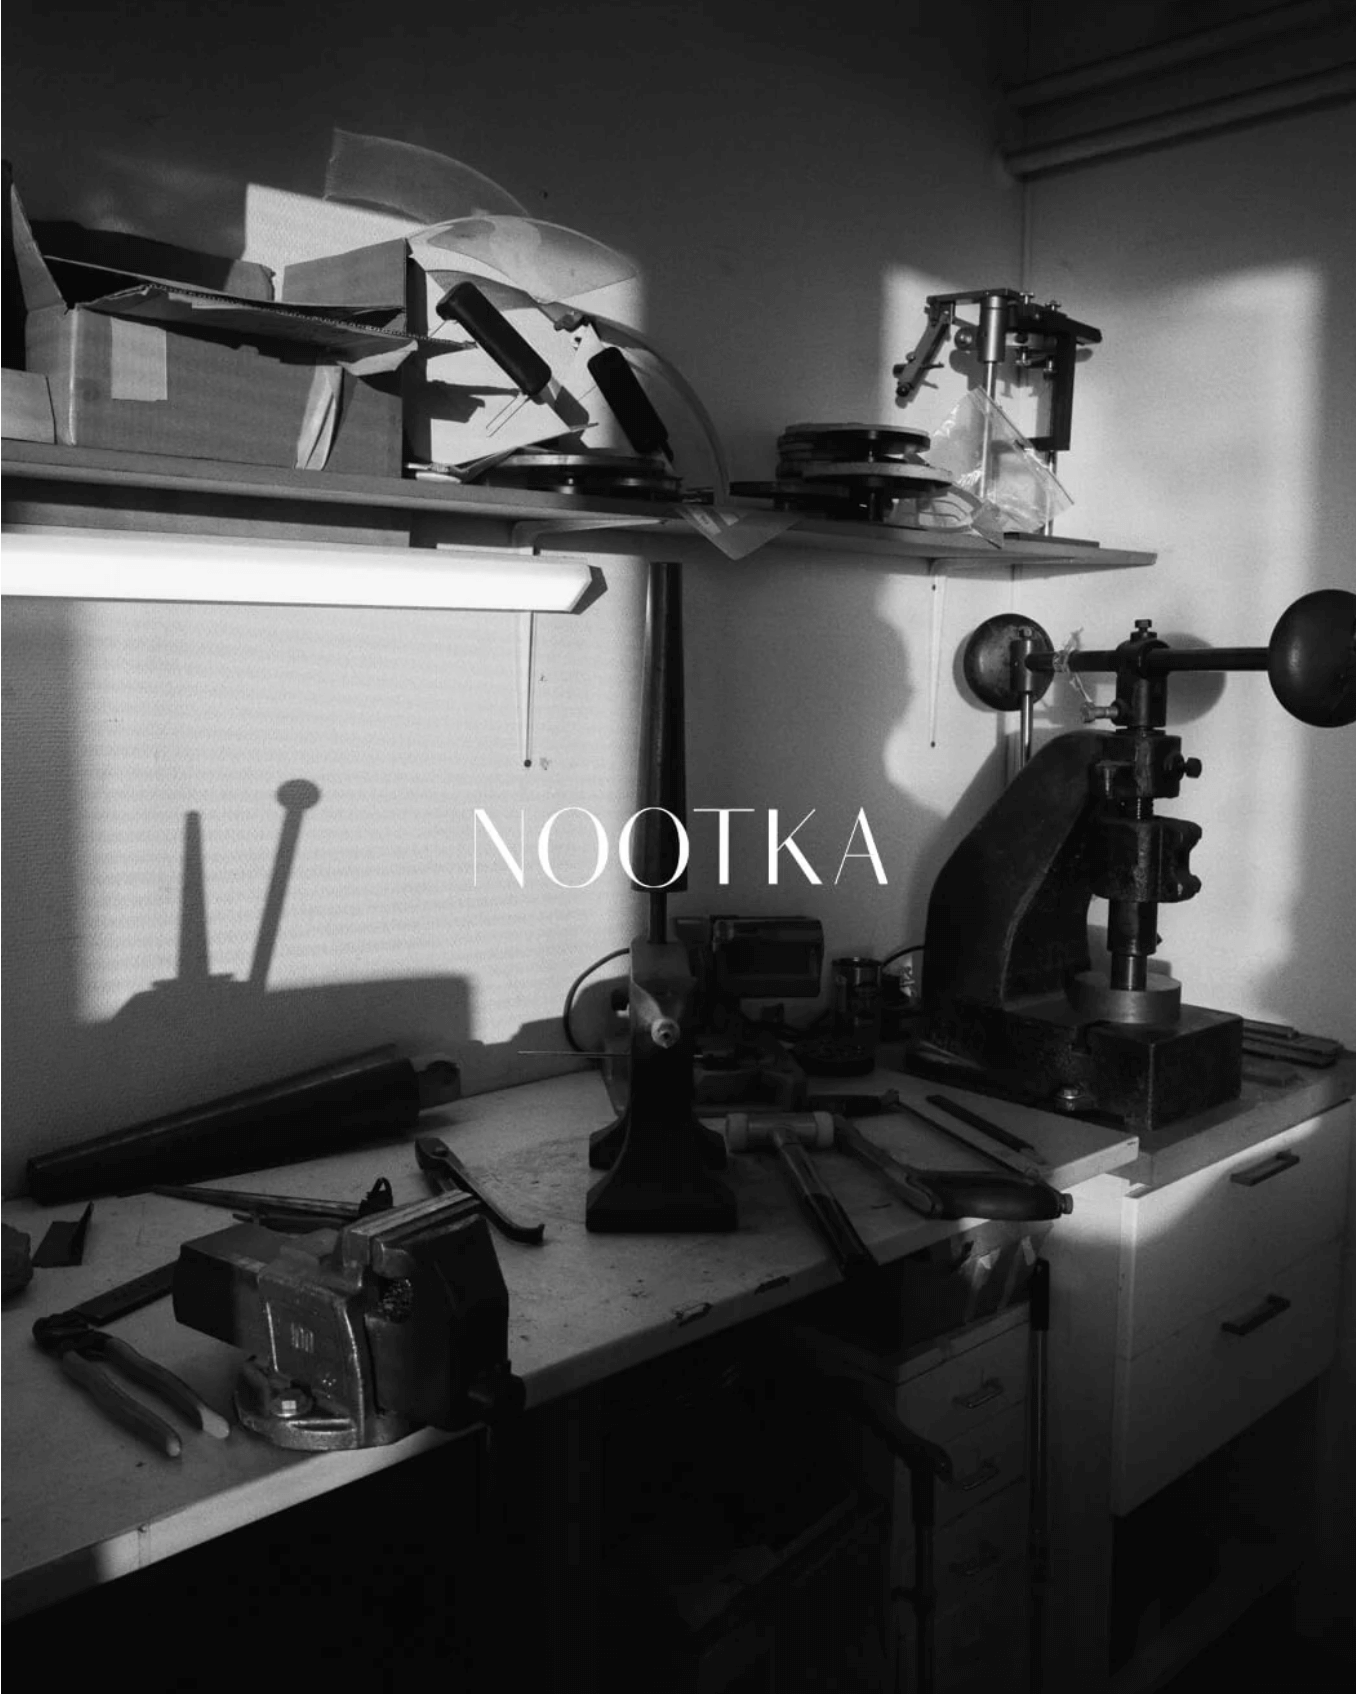 Nootka production handmade